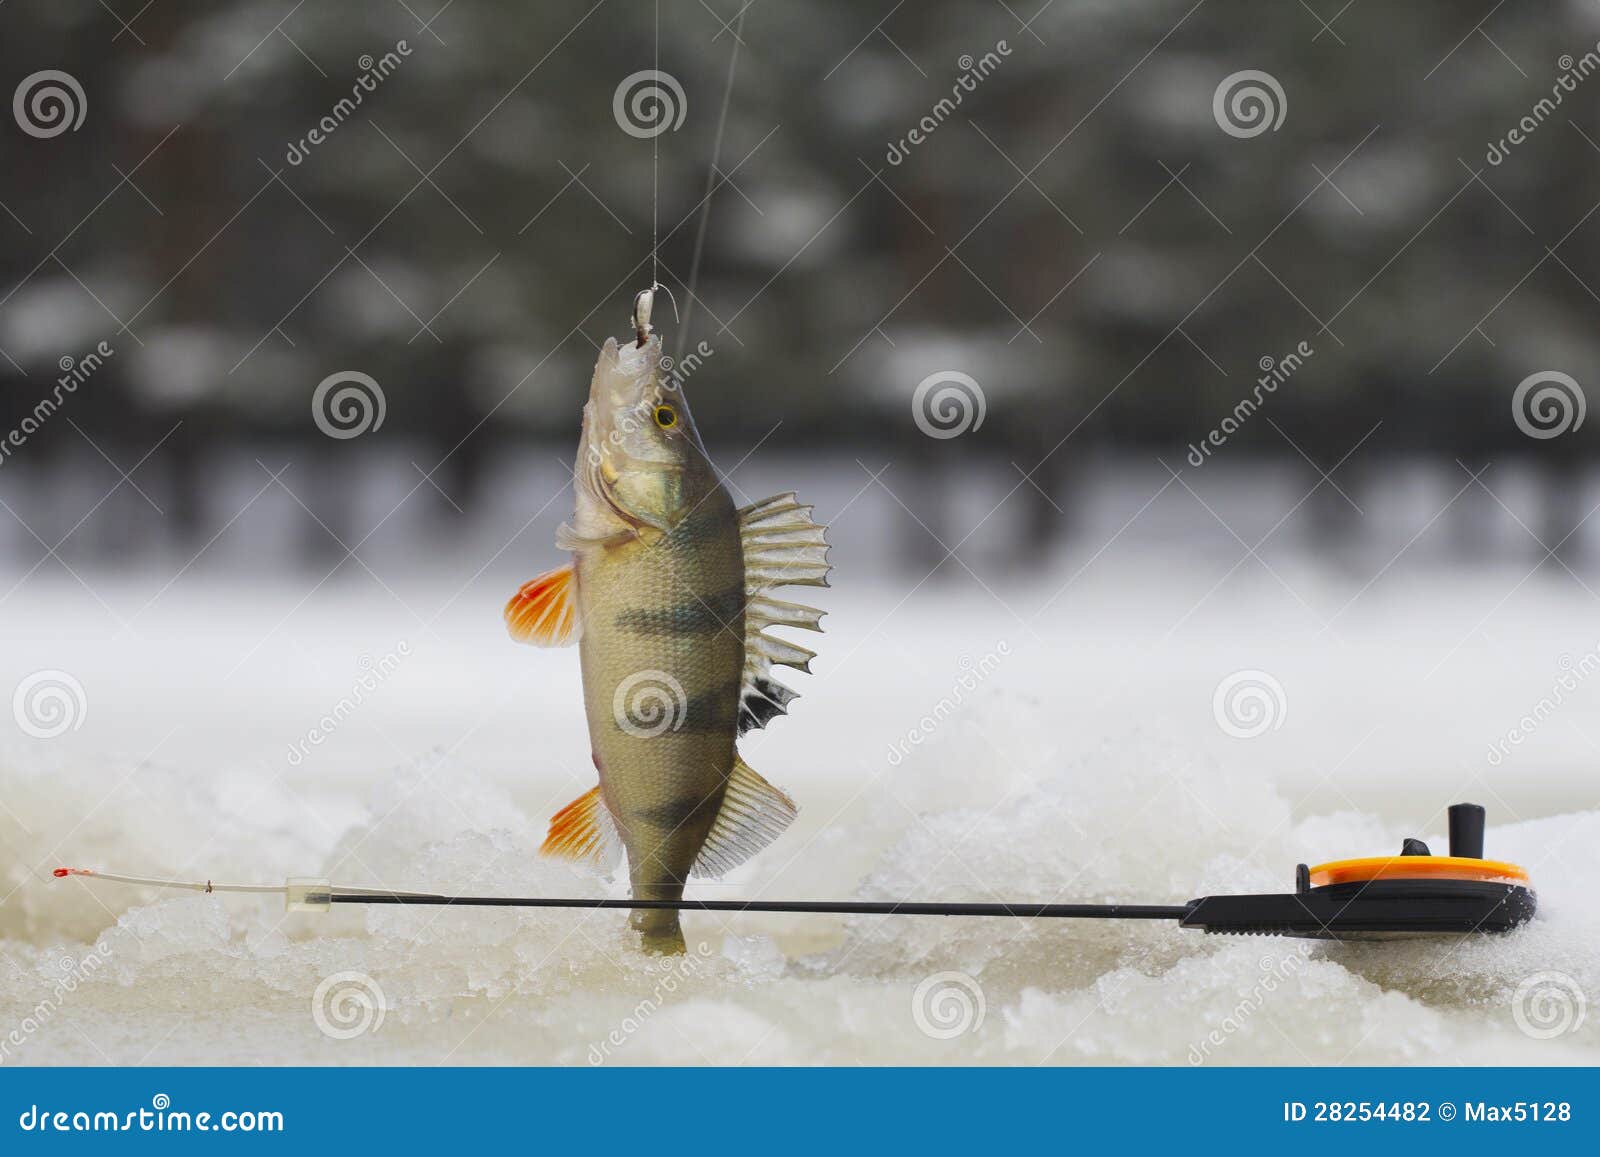 Freshwater perch fishing stock photo. Image of equipment - 28254482